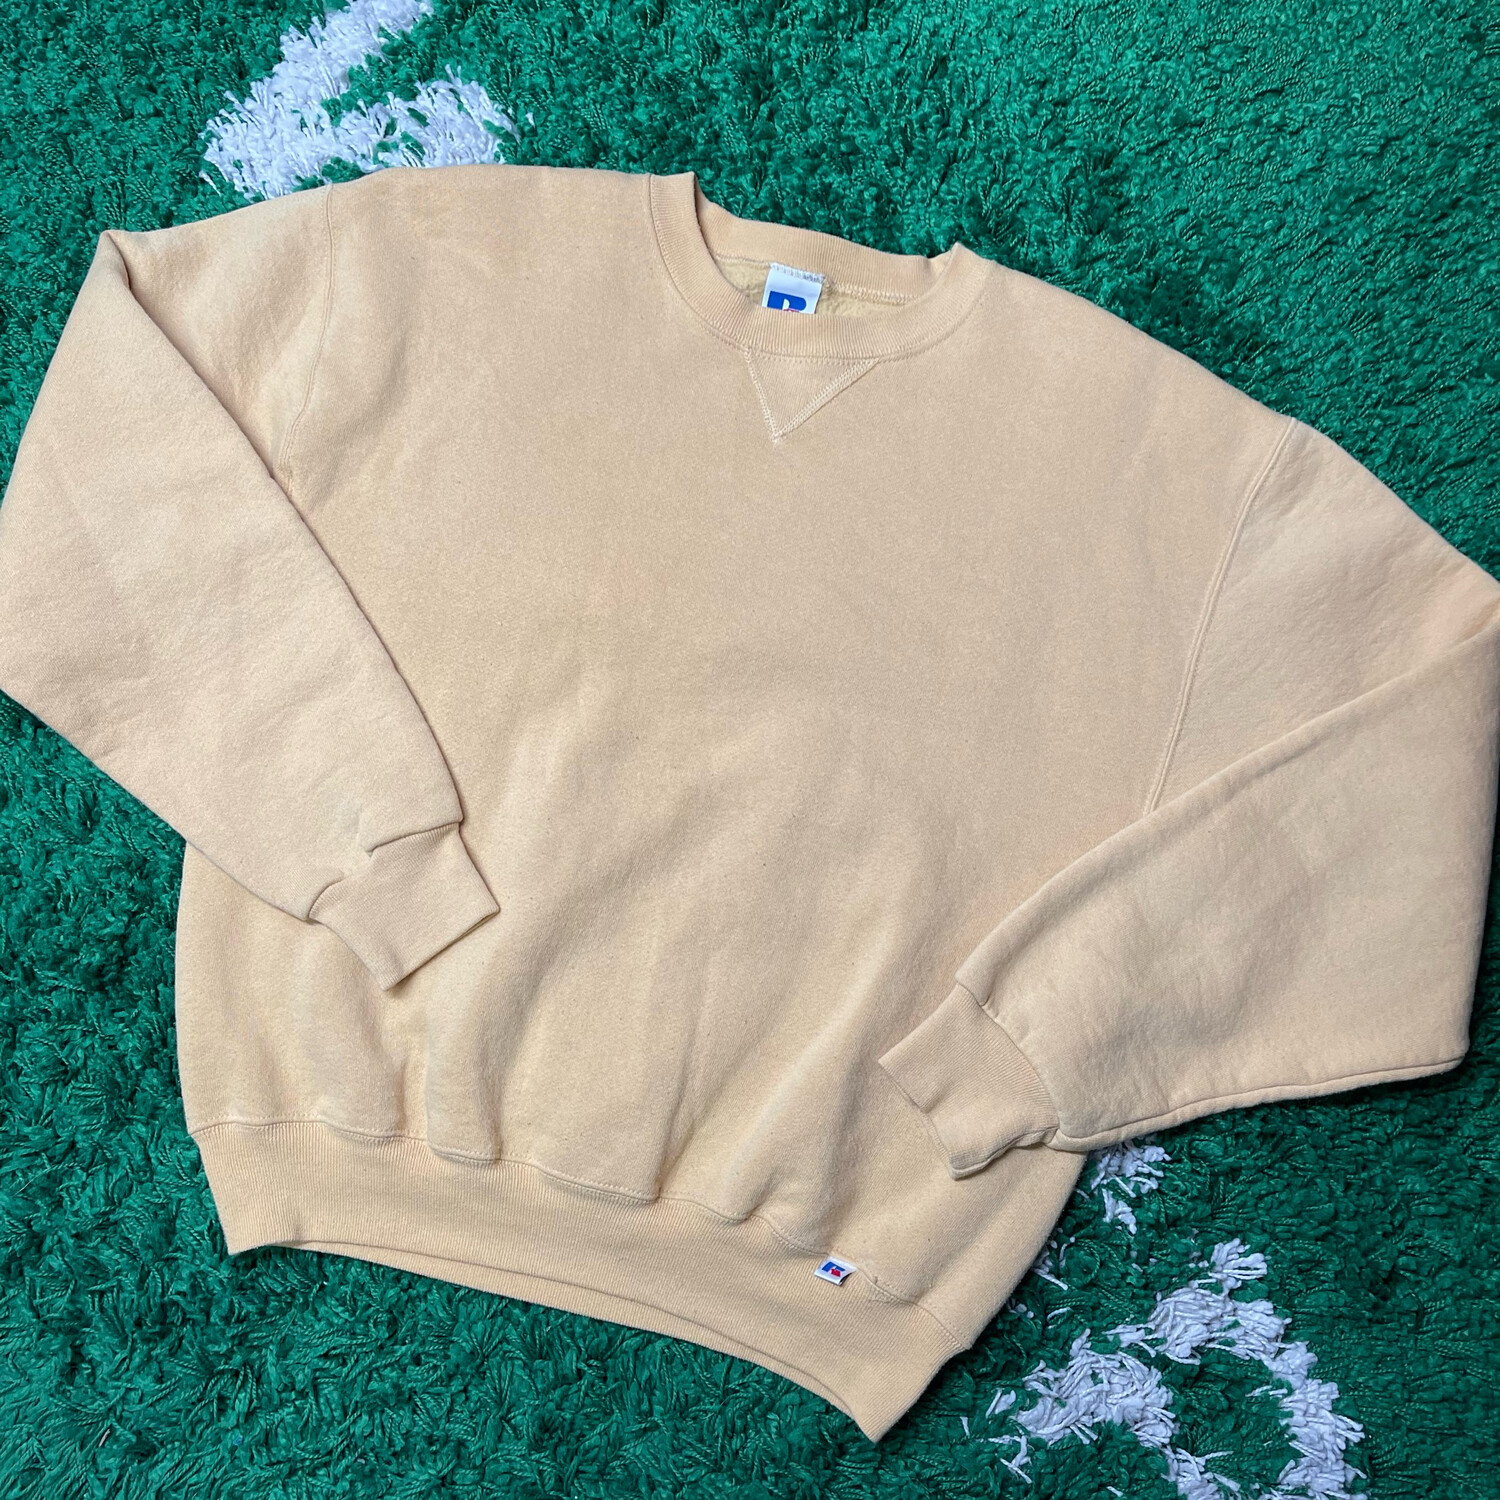 Russel Pale Yellow Blank Crewneck Sweatshirt Size Medium